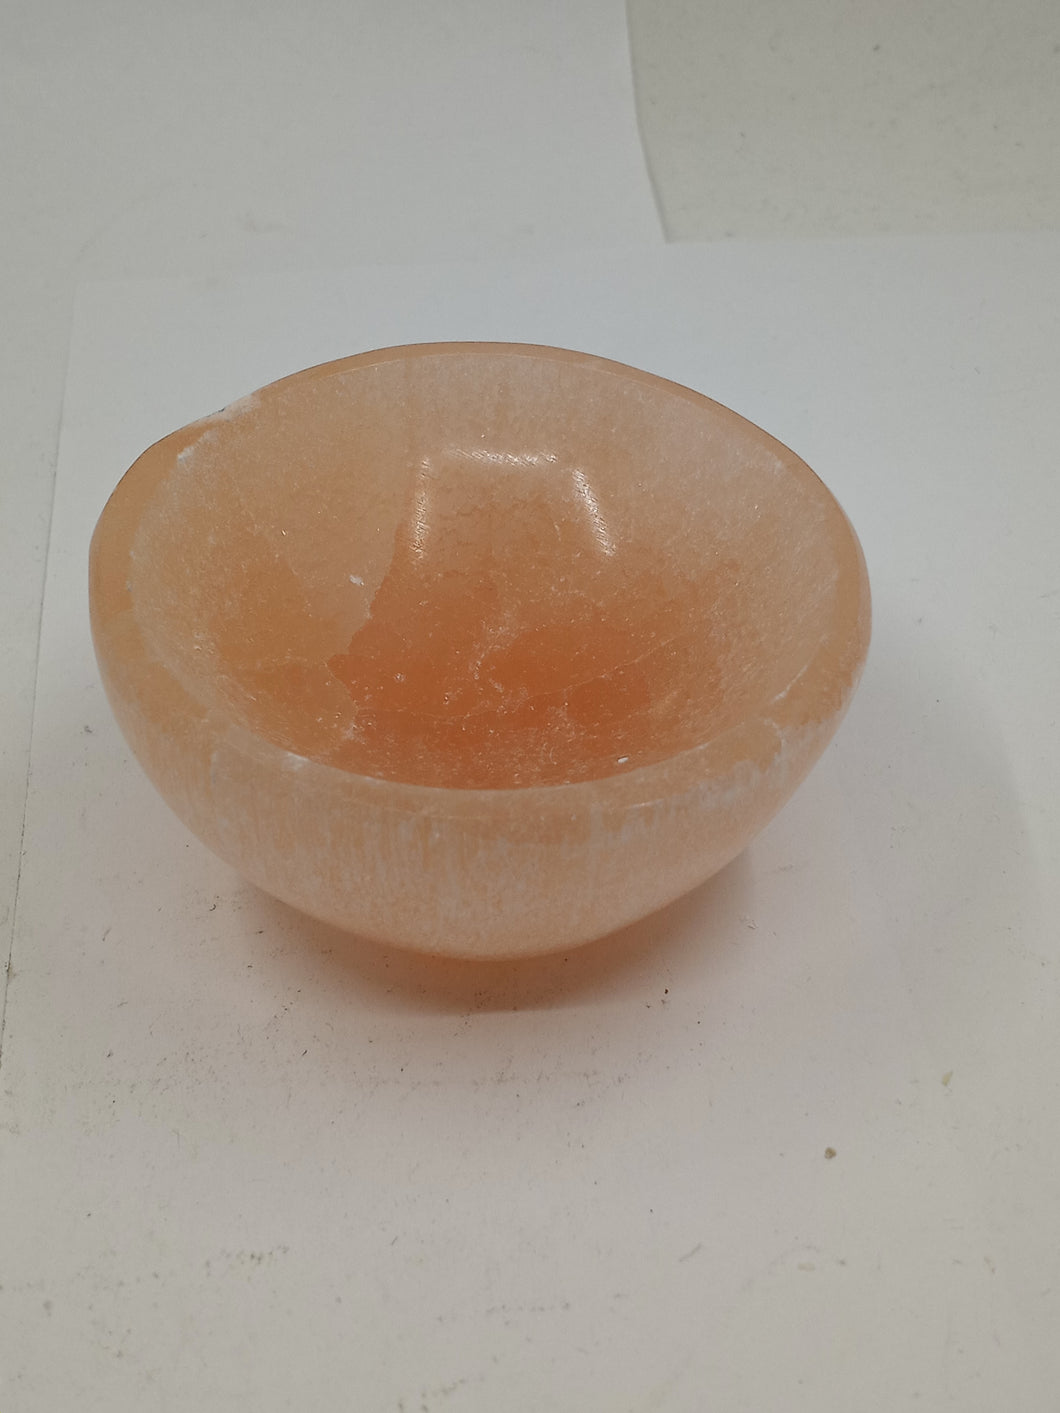 Orange selenite bowl on a white background.